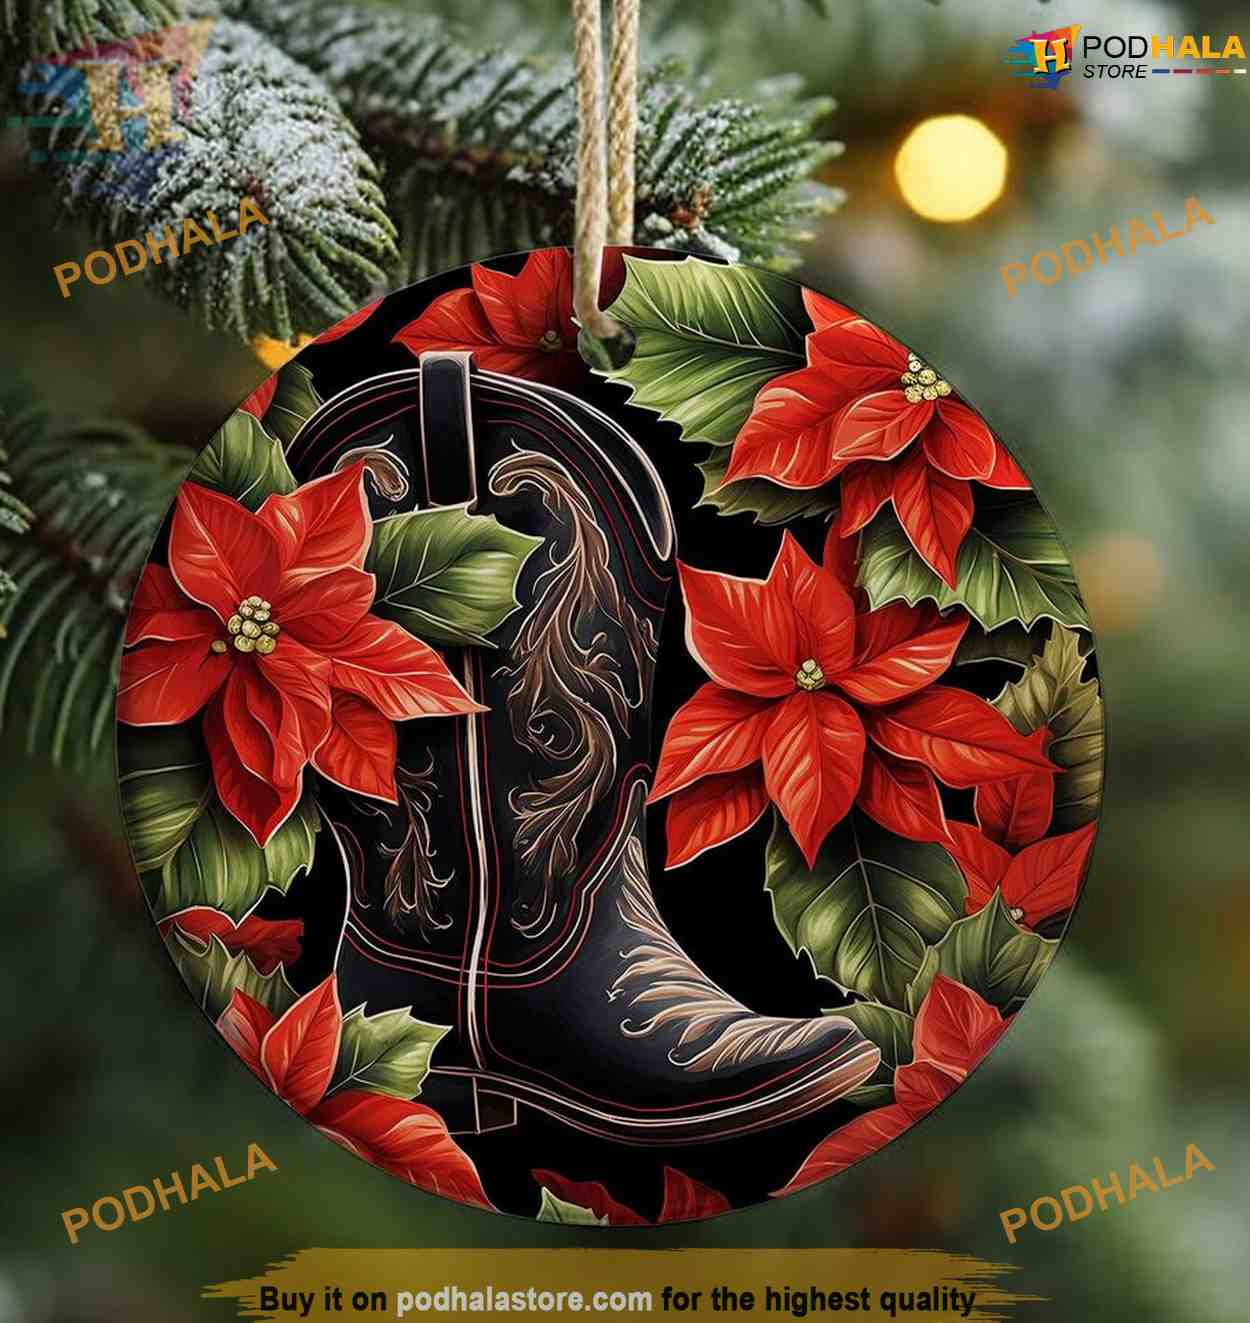 Christmas Cowboy Boot Ornament